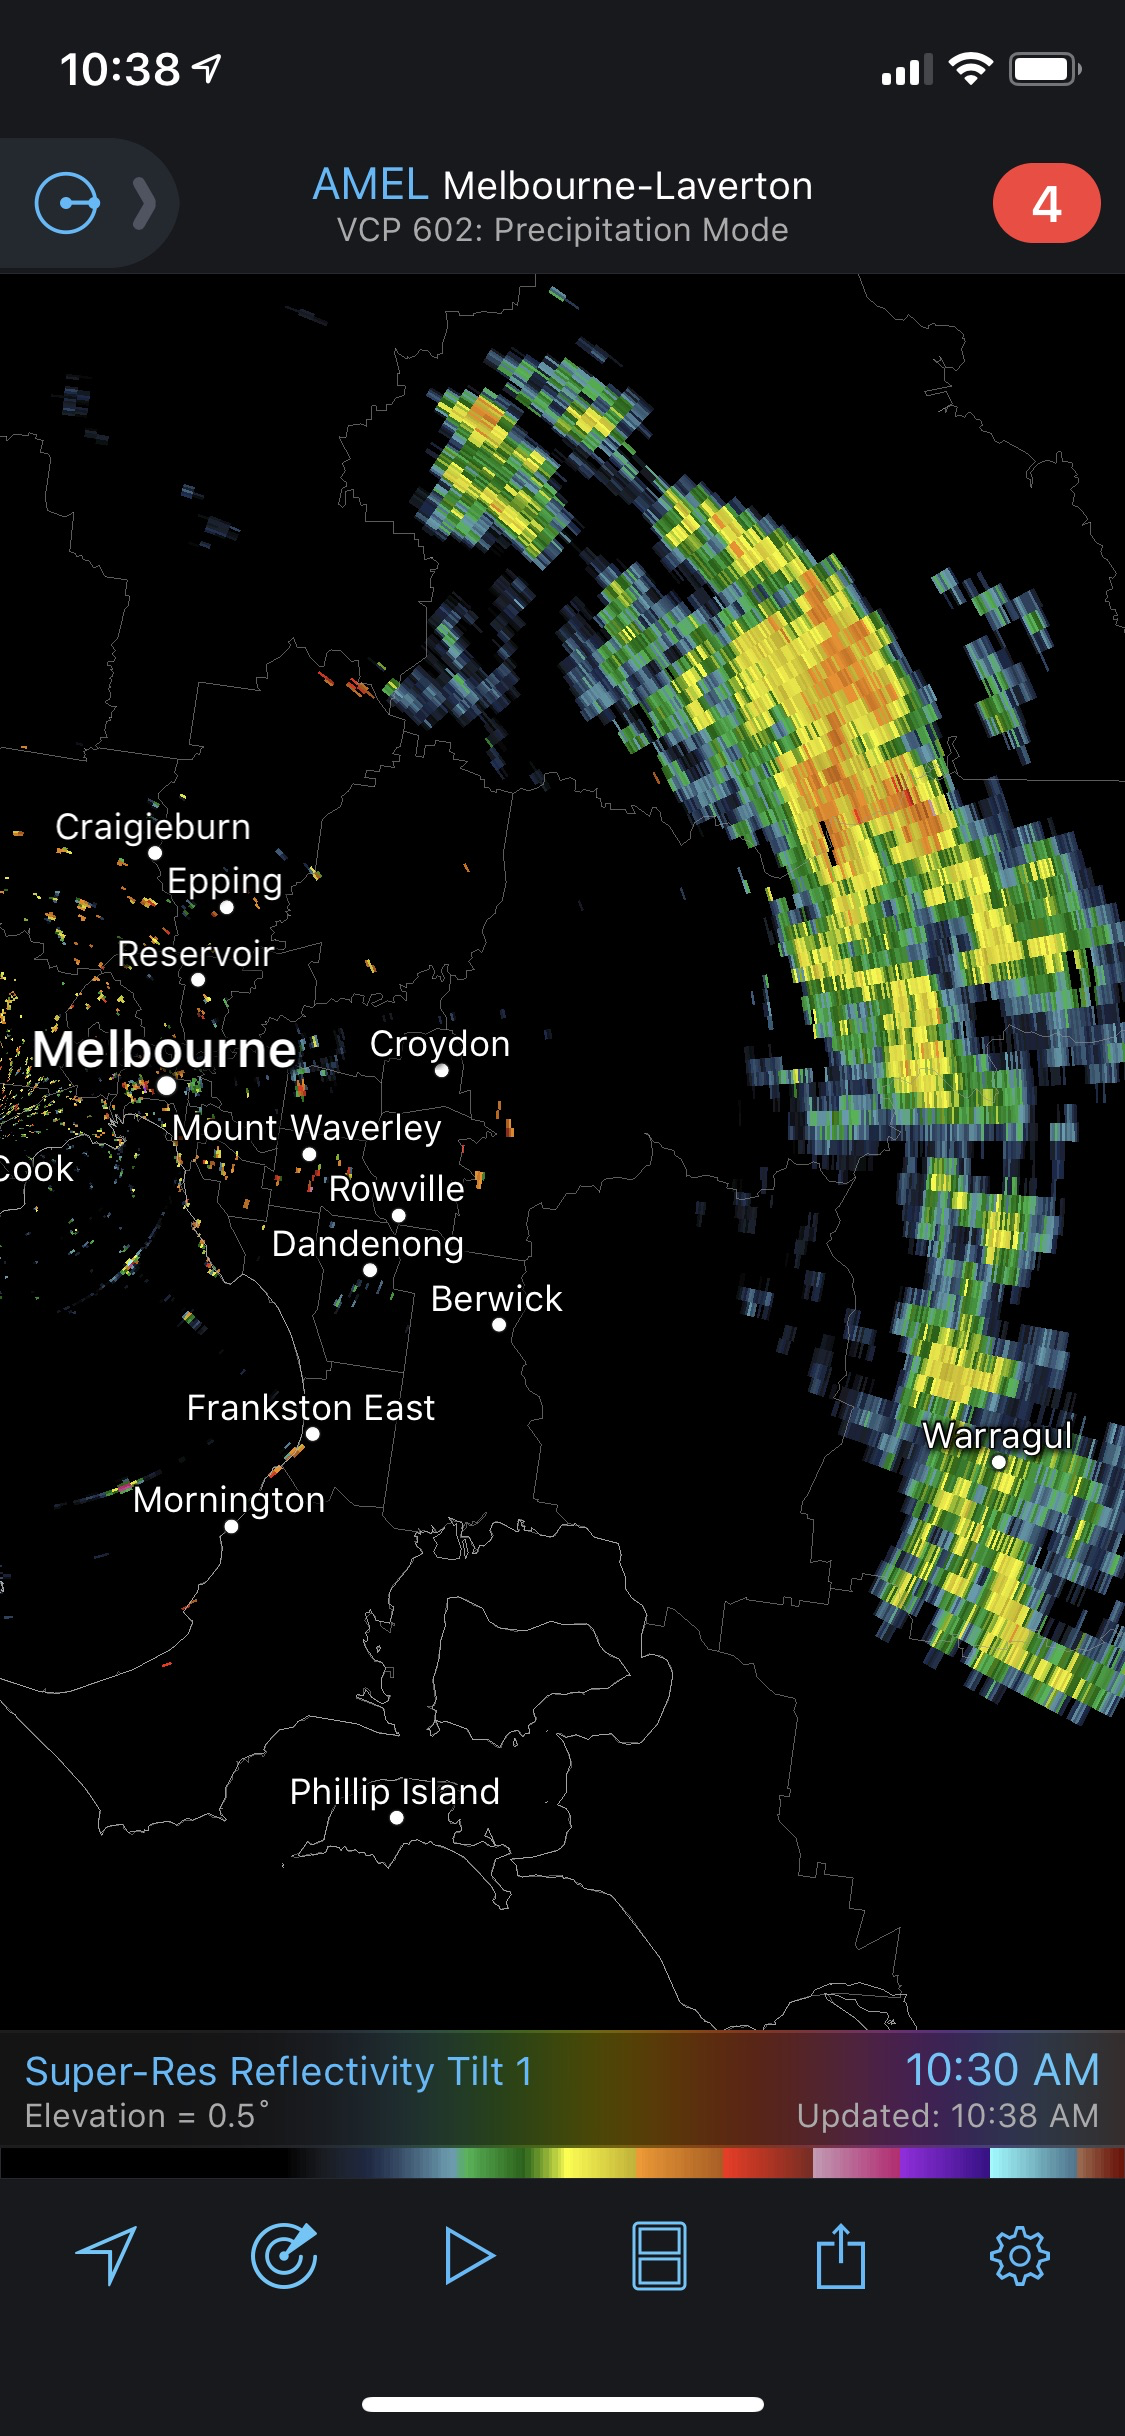 RadarScope Australia - Melbourne-Laverton Radar Precipitation Mode